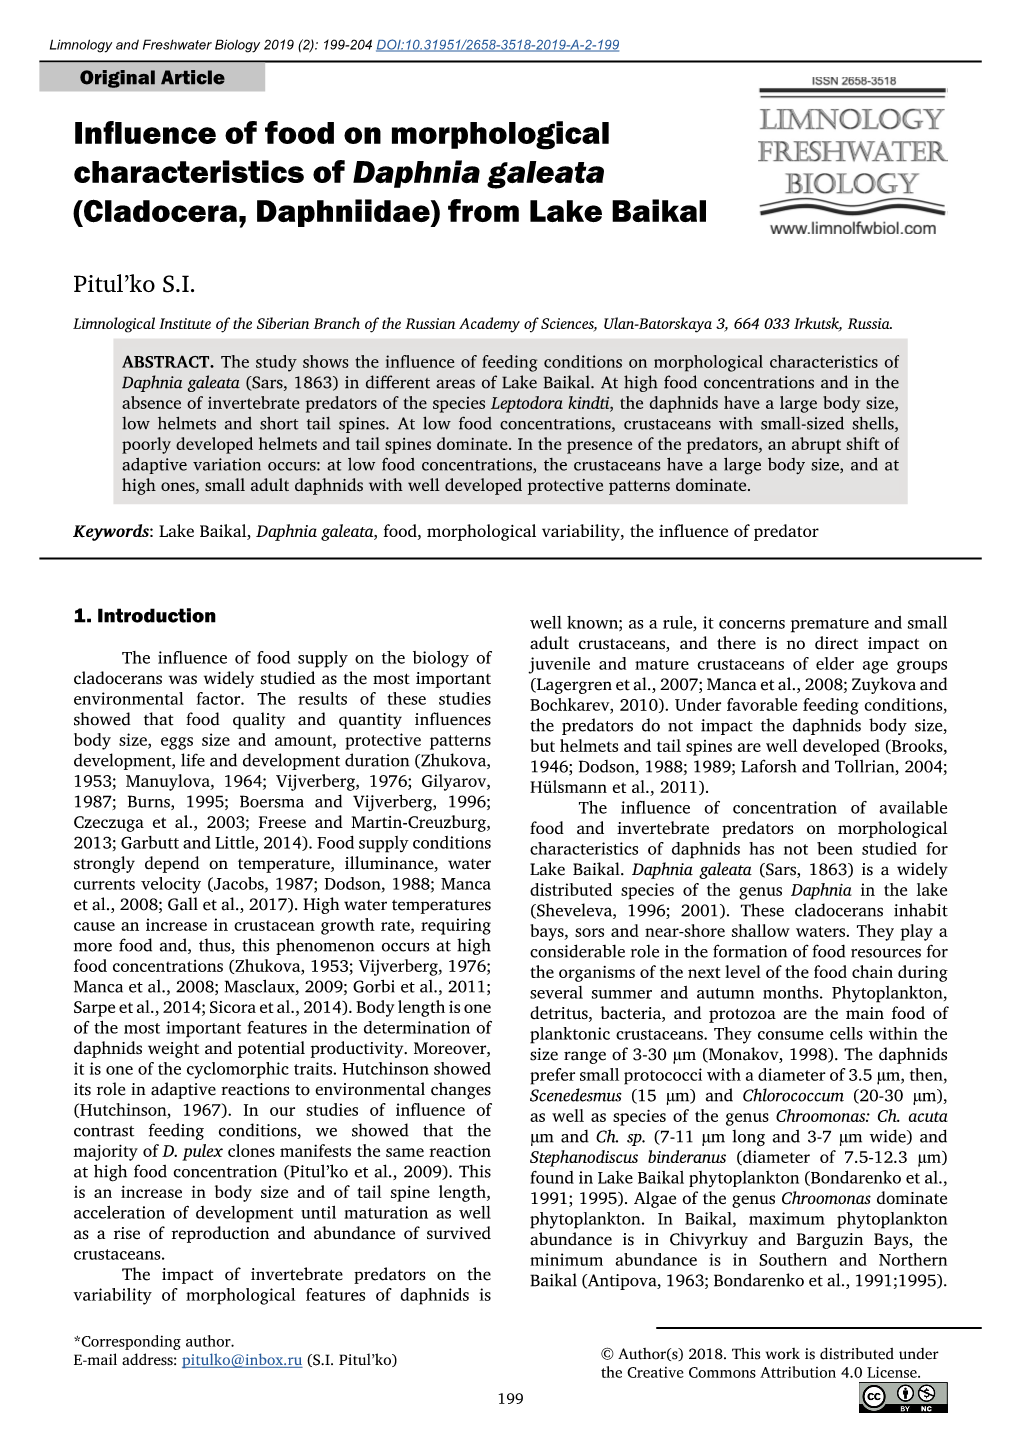 Influence of Food on Morphological Characteristics of Daphnia Galeata (Cladocera, Daphniidae) from Lake Baikal